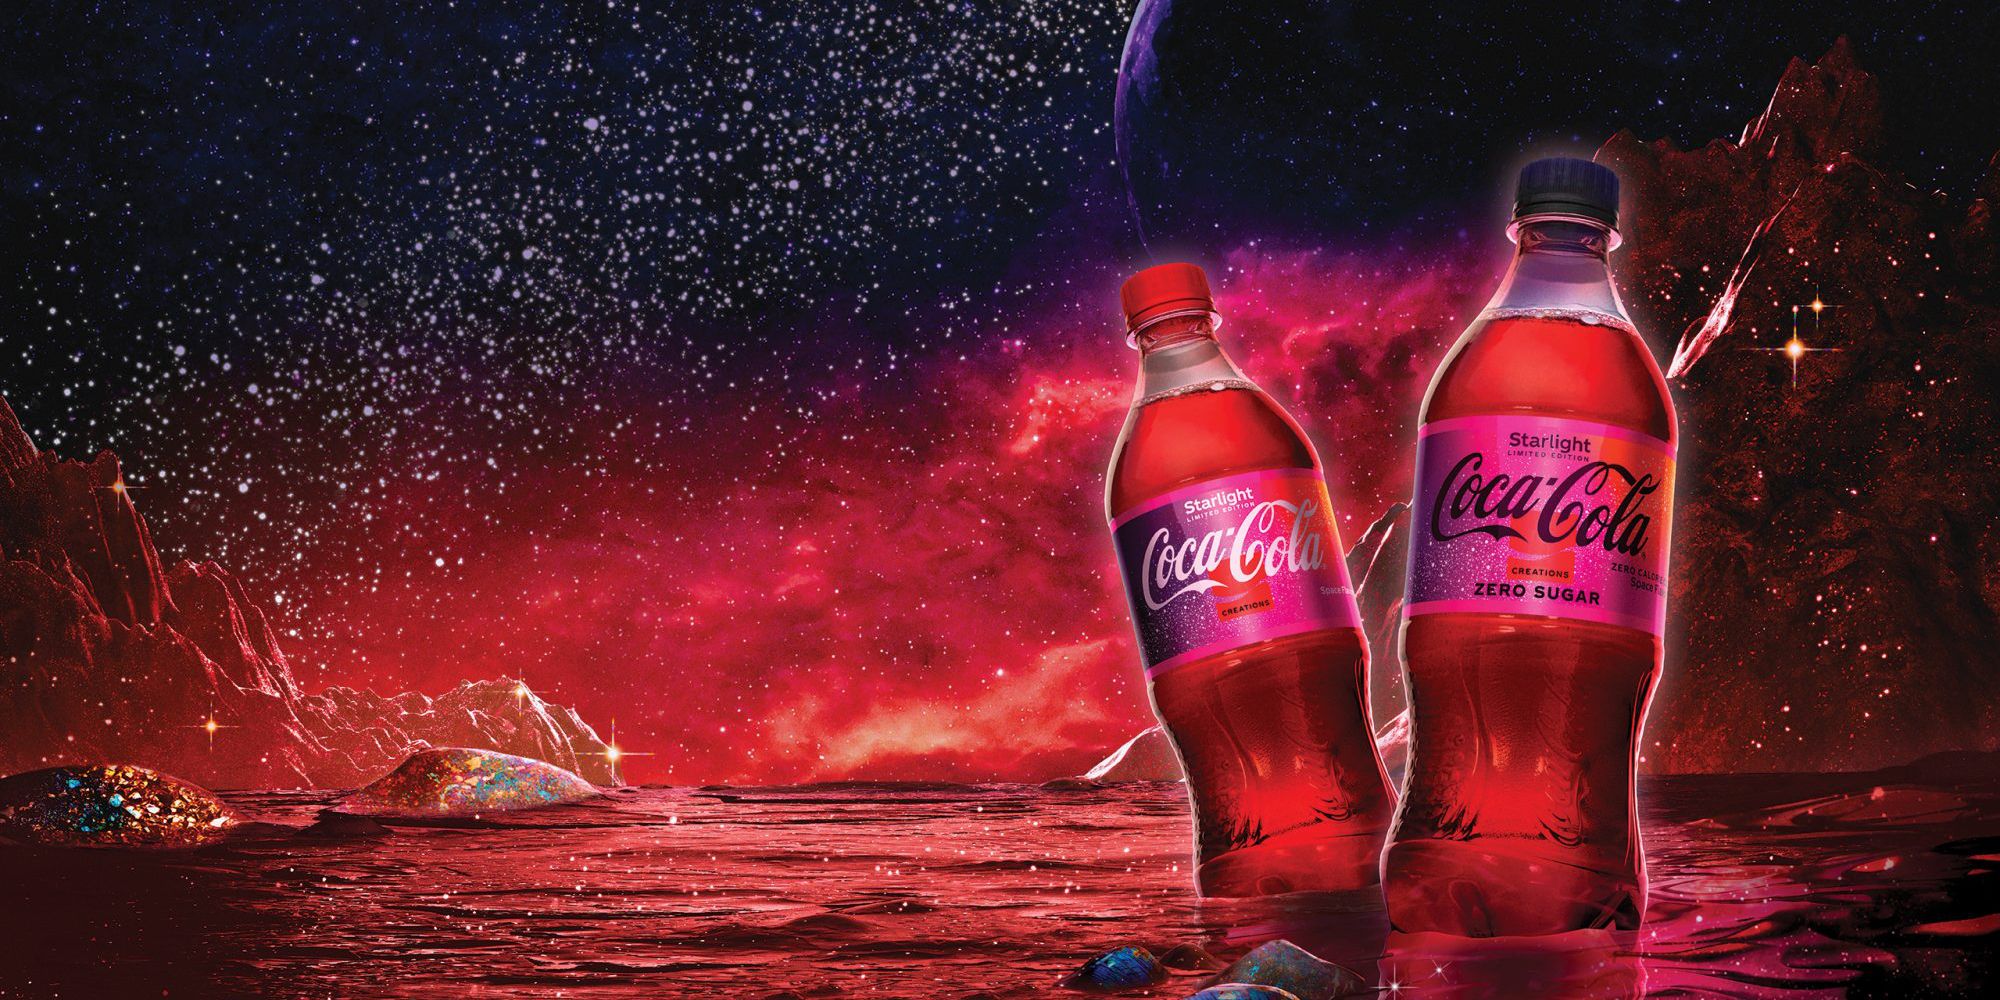 Starlight Coca-Cola that tastes like space